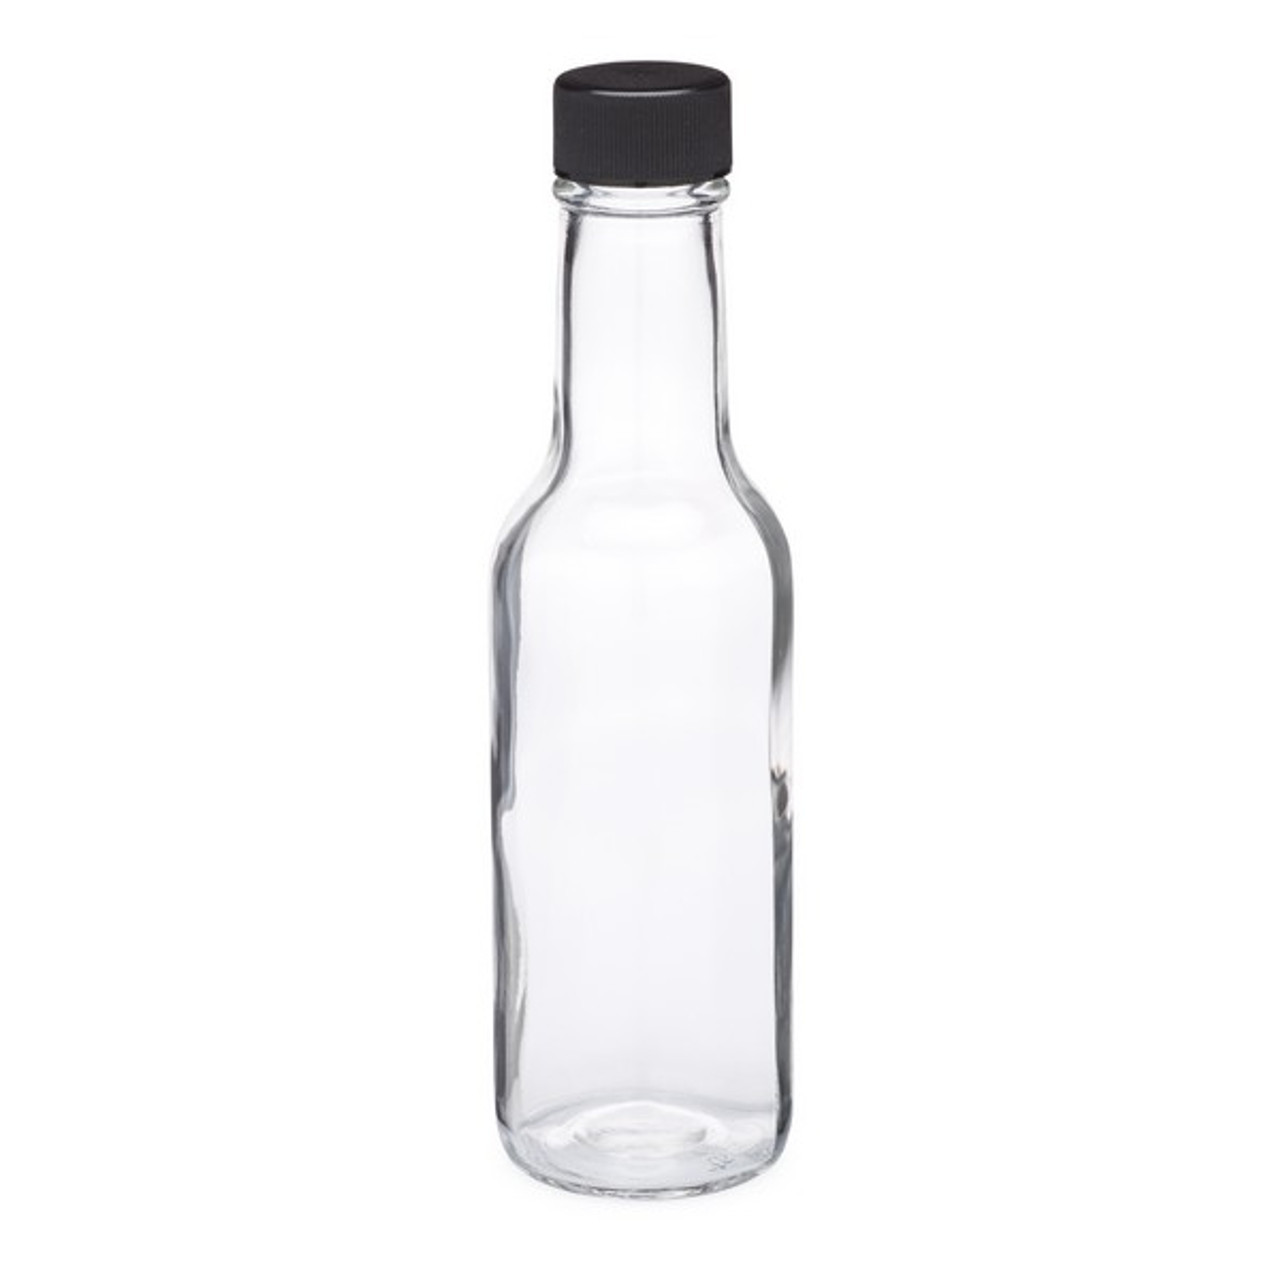 Glass Bottle, Hot Sauce Bottles Woozy bottles Empty 3 Oz 30 sets with  Shrink Capsules Dripper Insert…See more Glass Bottle, Hot Sauce Bottles  Woozy